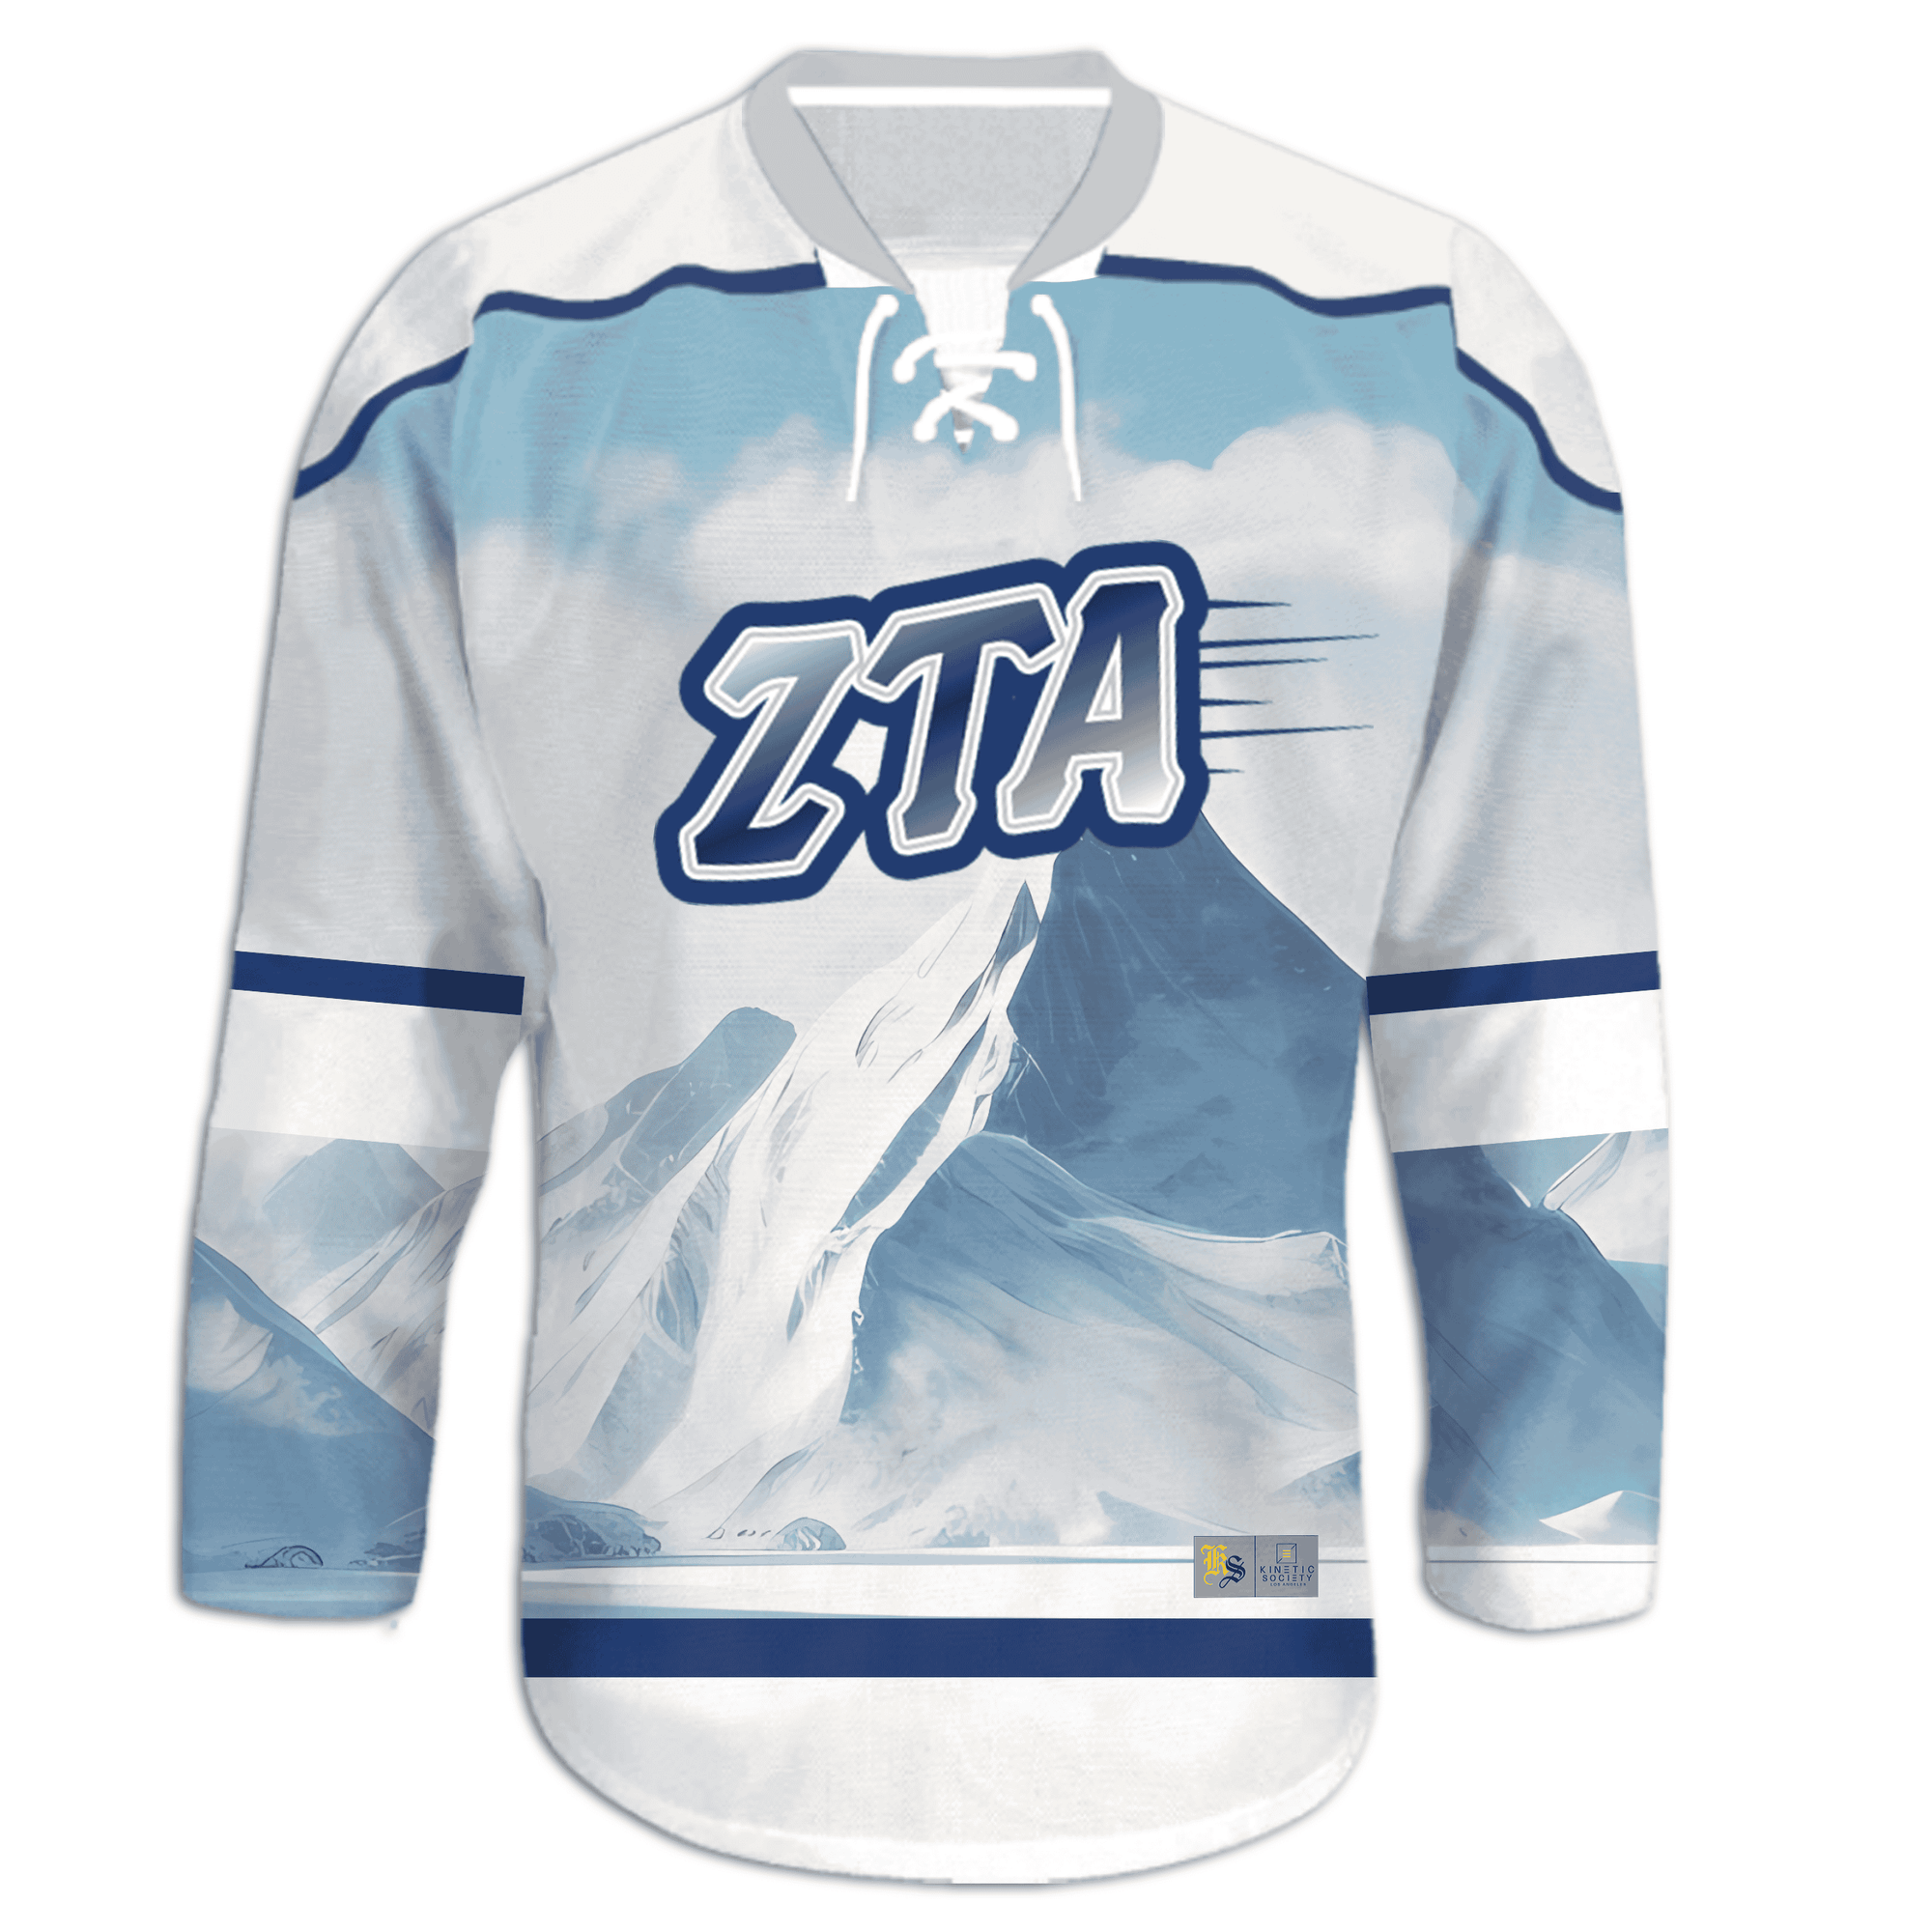 Zeta Tau Alpha - Avalanche Hockey Jersey